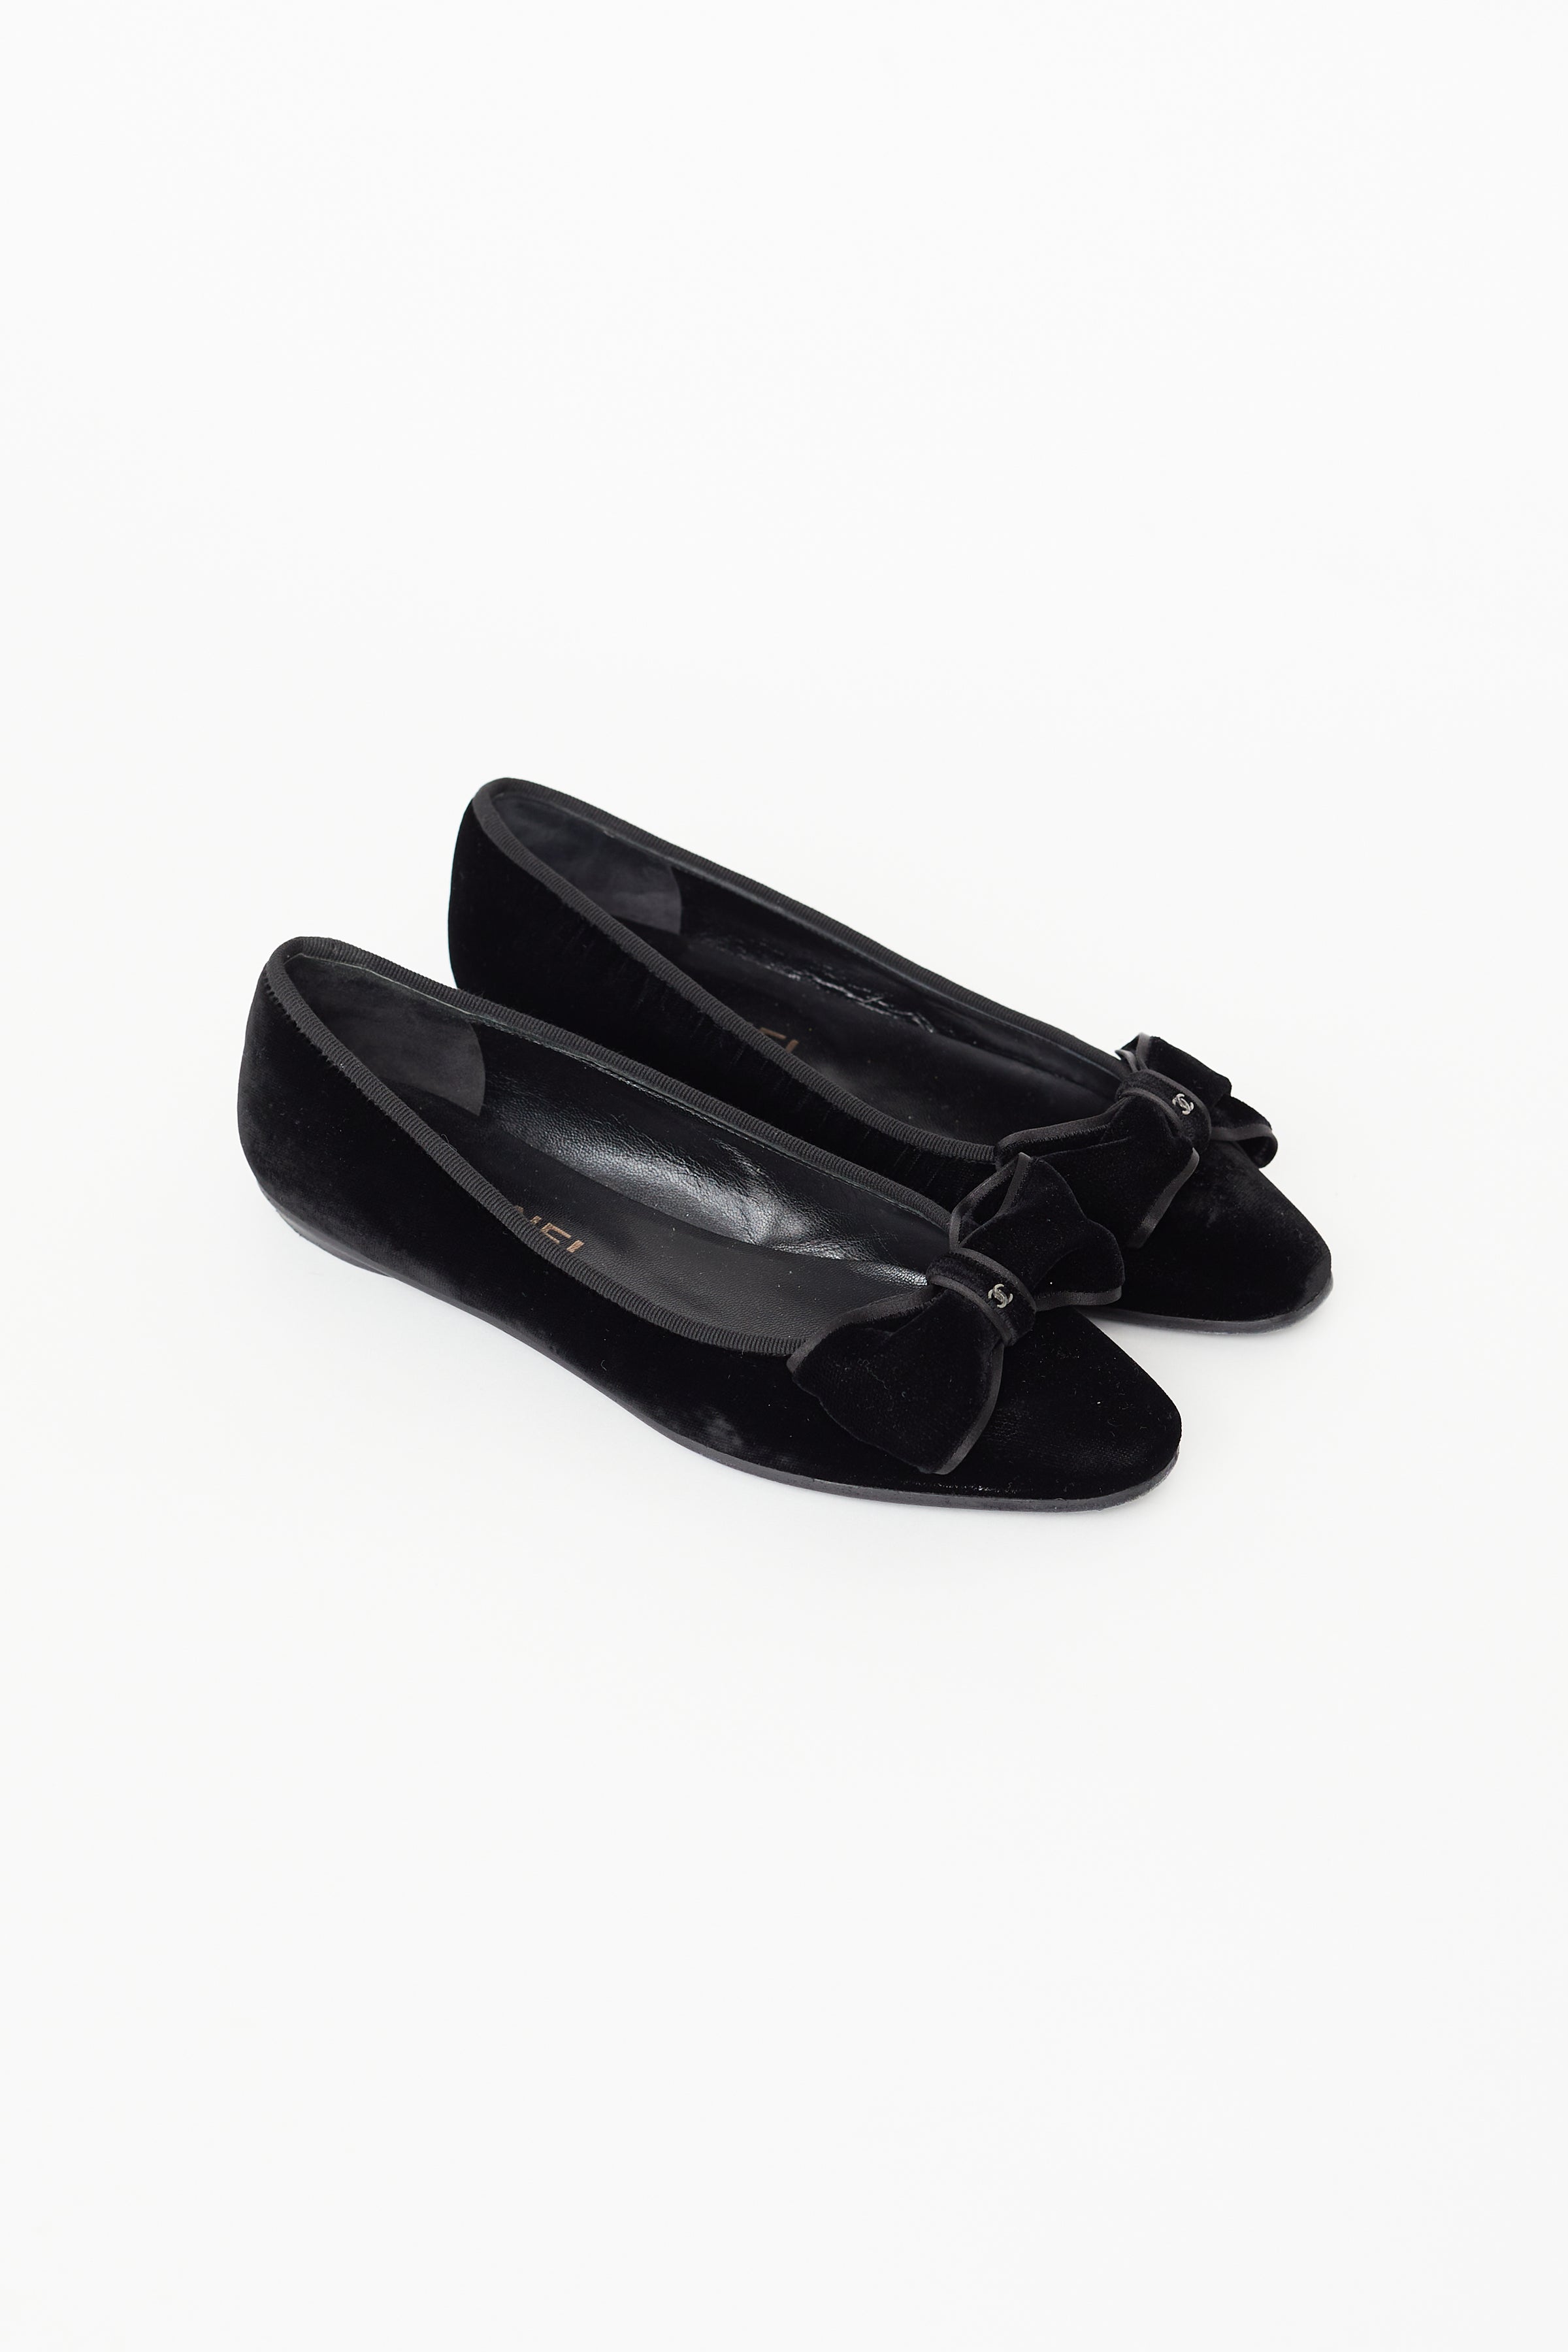 Chanel - Authenticated Ballet Flats - Velvet Black Plain for Women, Very Good Condition